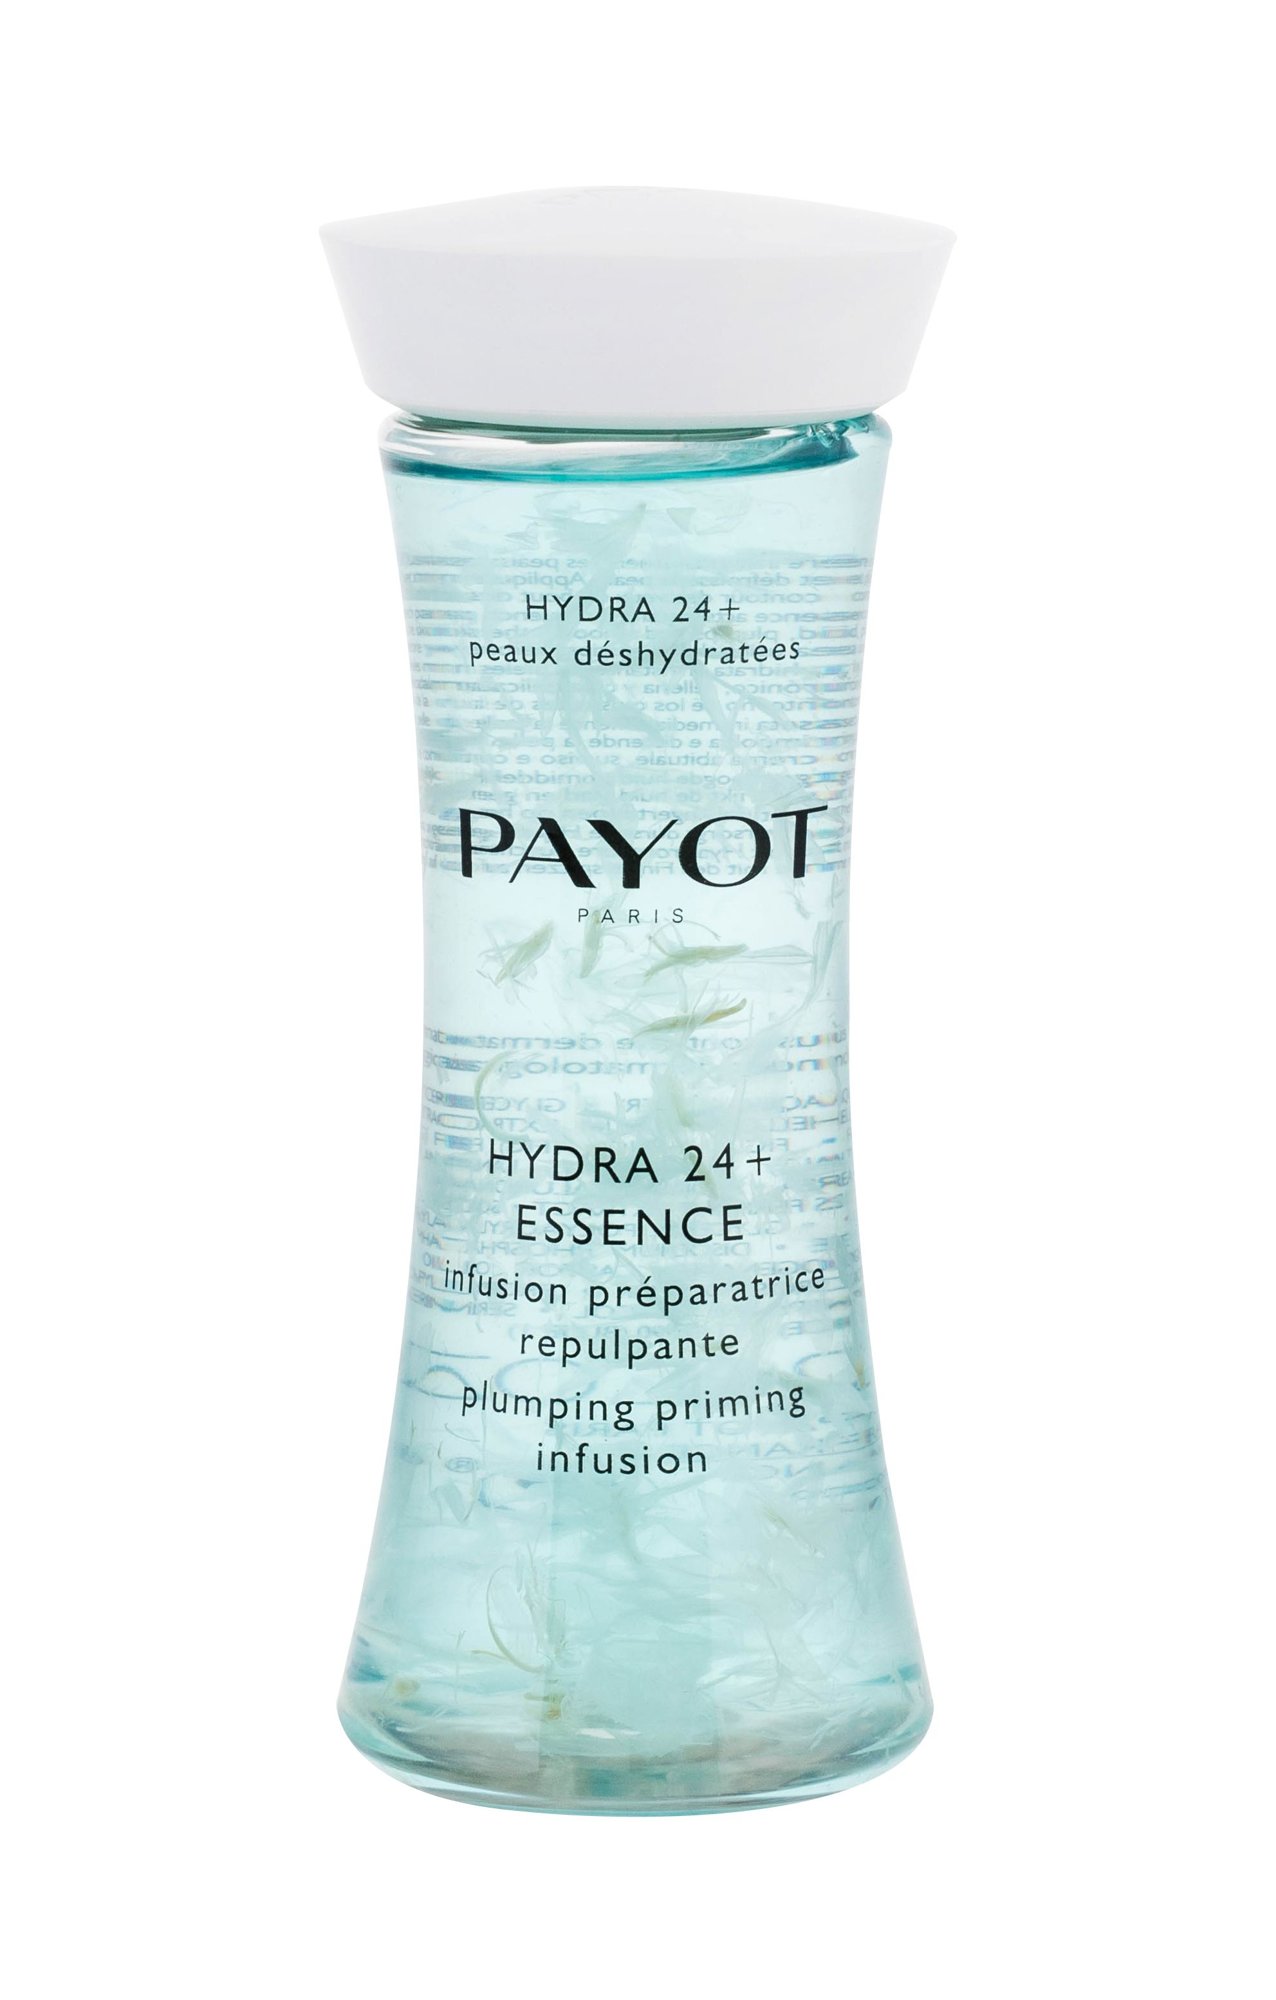 Payot gel. Payot hydra 24+ Essence. Payot косметика сыворотка увлажняющая для лица. Payot крем для лица увлажняющий hydra 24+. Payot hydra 24+ Essence балони.